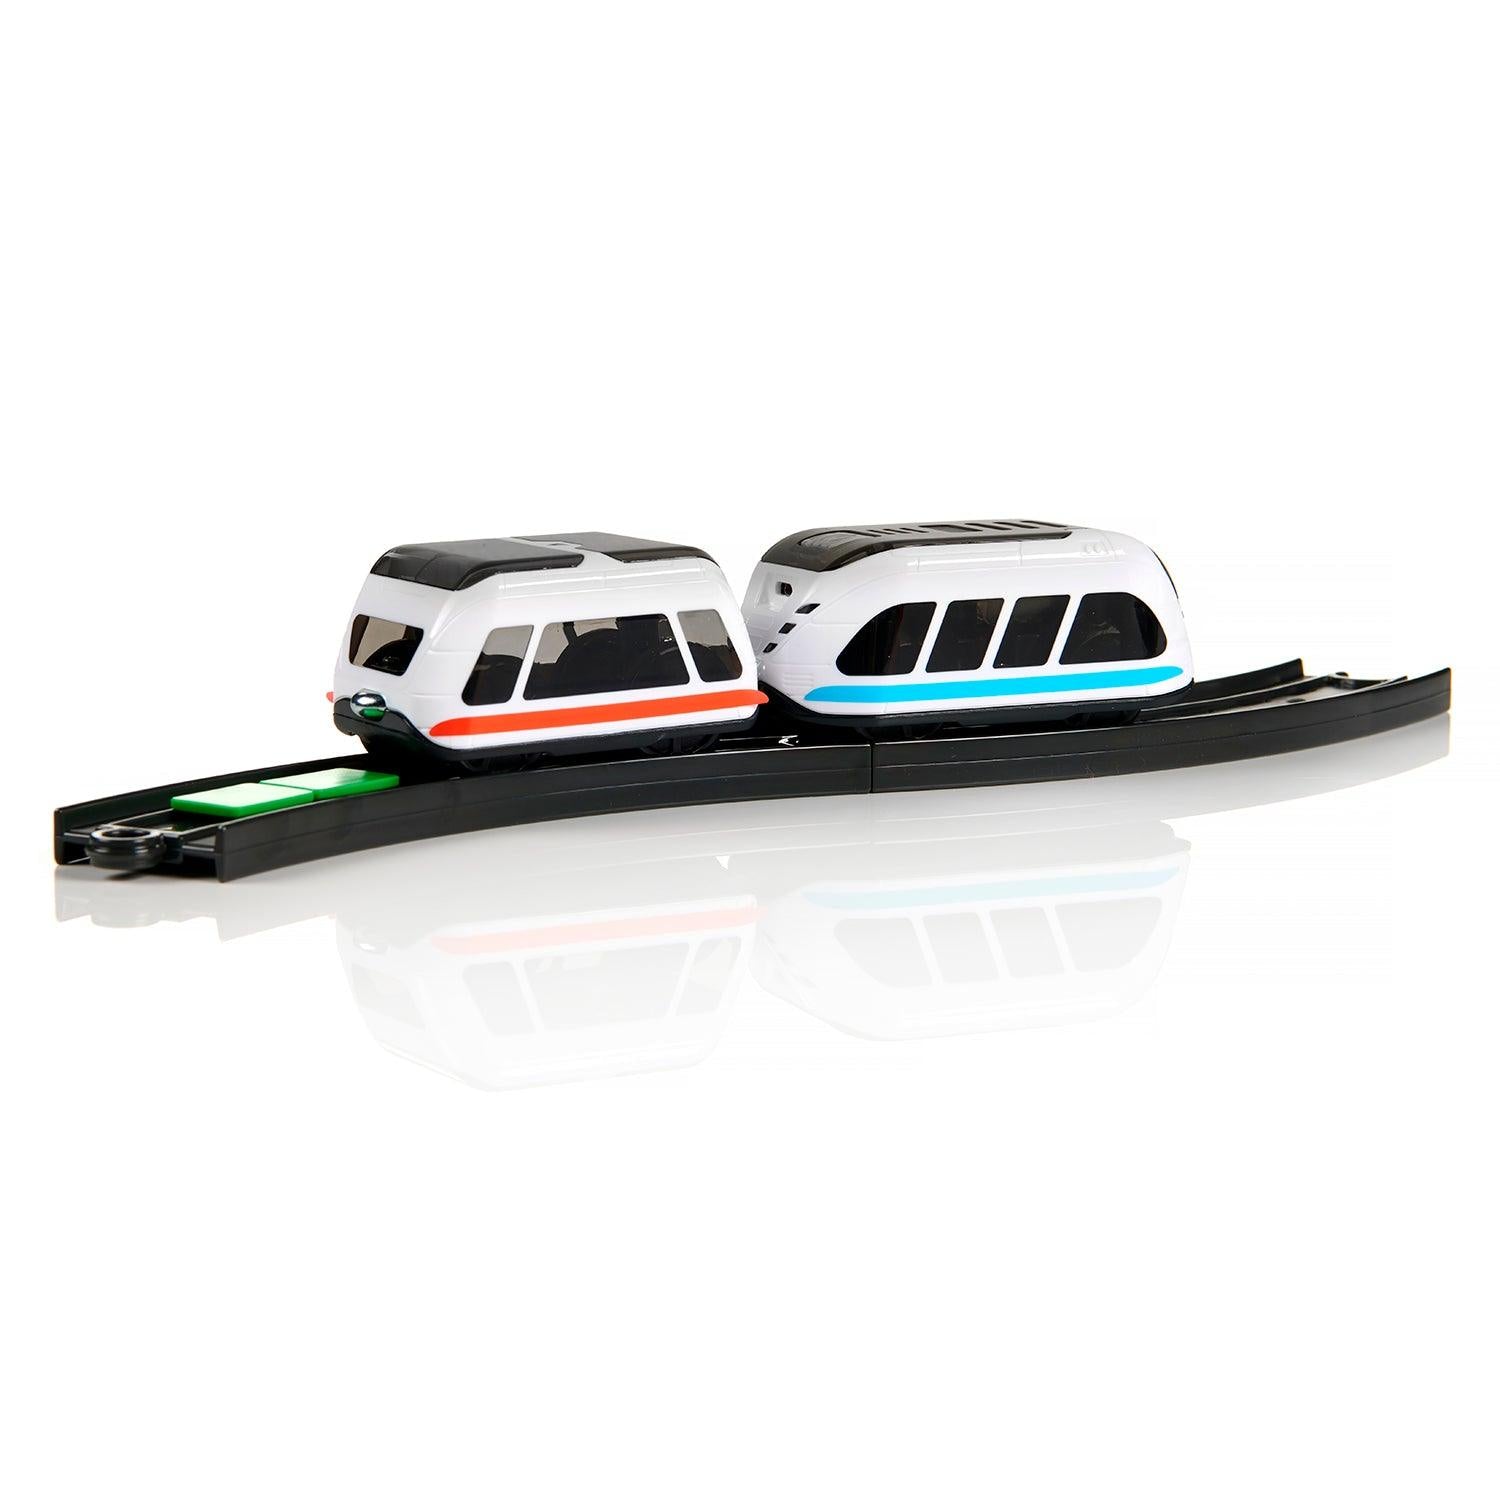 Intelino Smart Train Starter Set - Kids Railways Models - Science Museum Shop